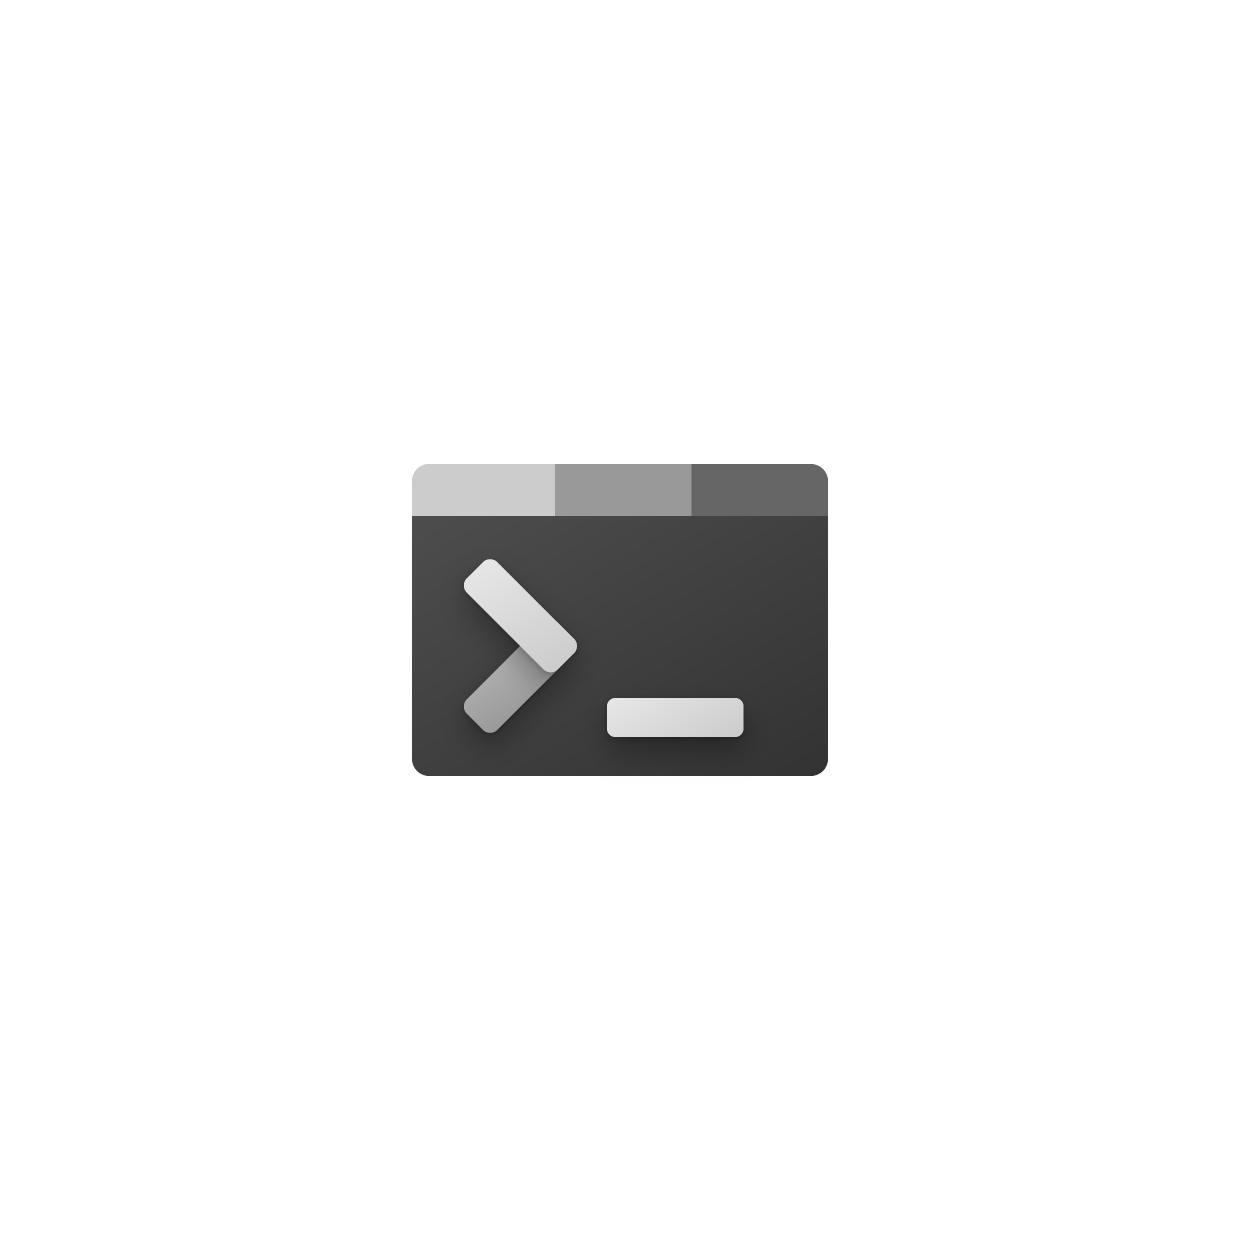 Windows terminal icon - oserewards